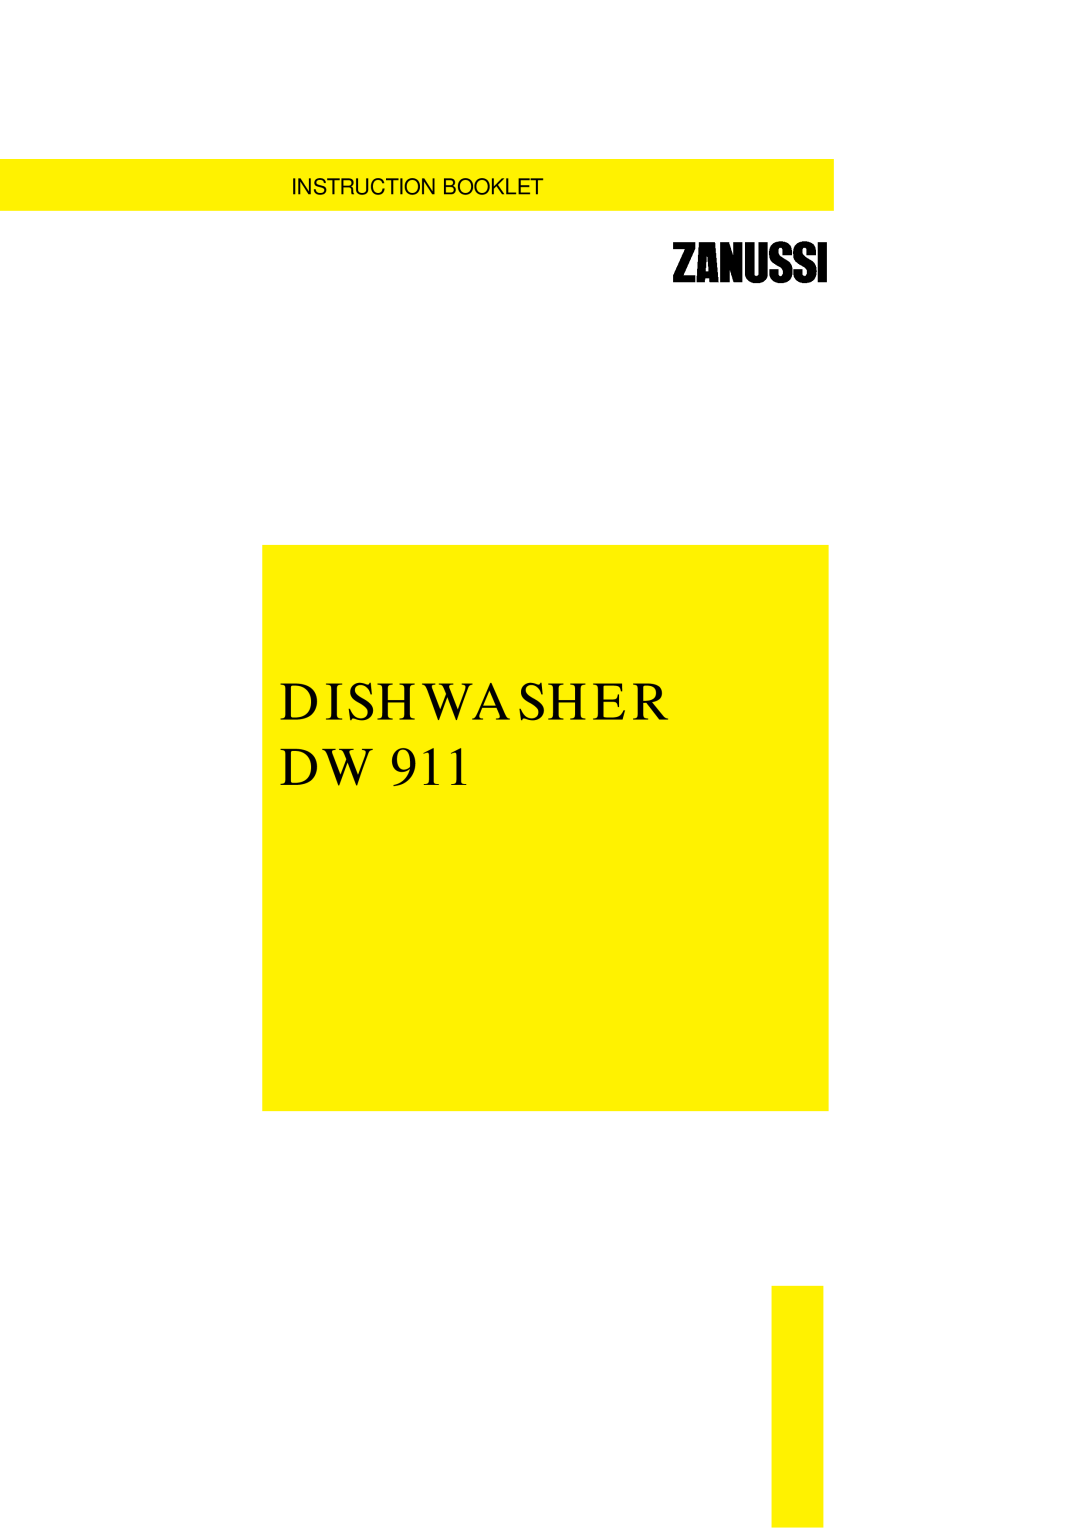 Zanussi DW 911 manual Dishwasher Dw, Instruction Booklet 